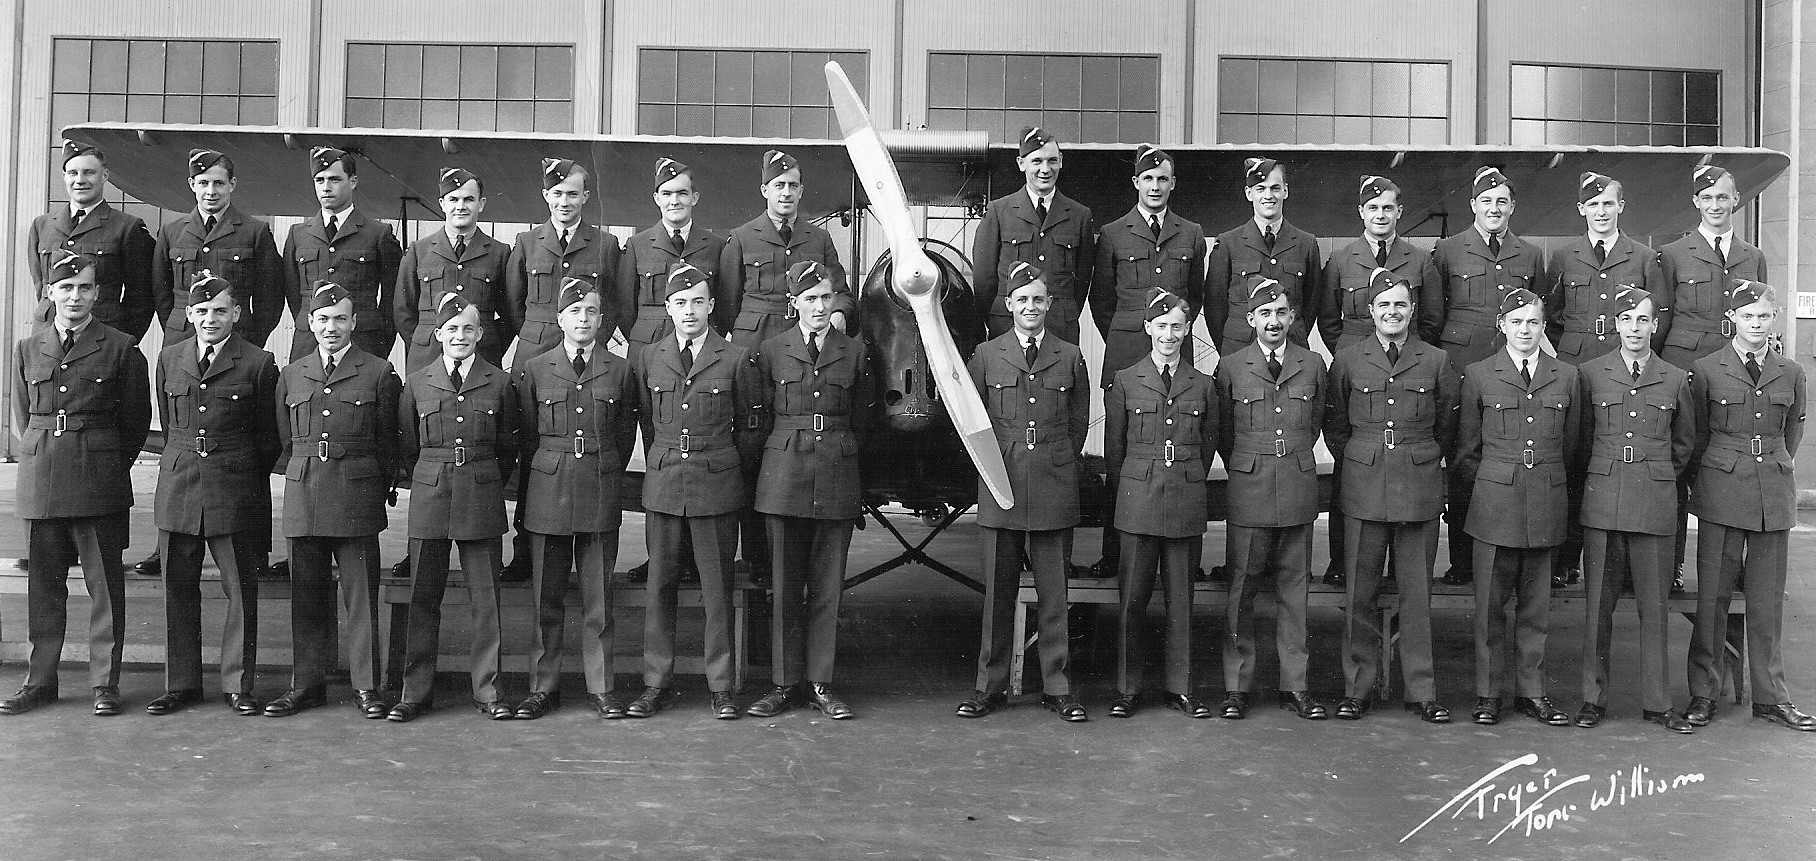 Elementary Flight Training School, Fort William, Ontario - August 1941 (2)